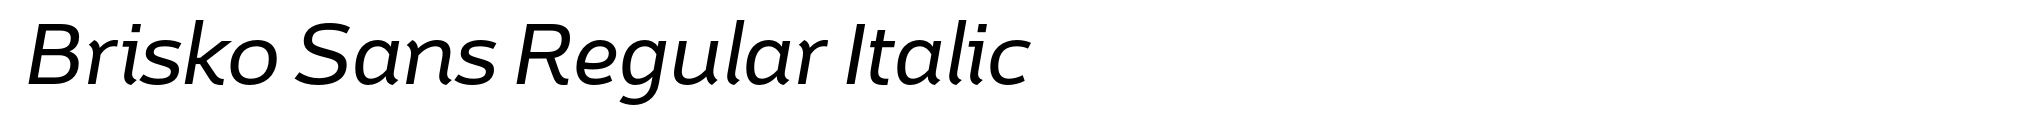 Brisko Sans Regular Italic image